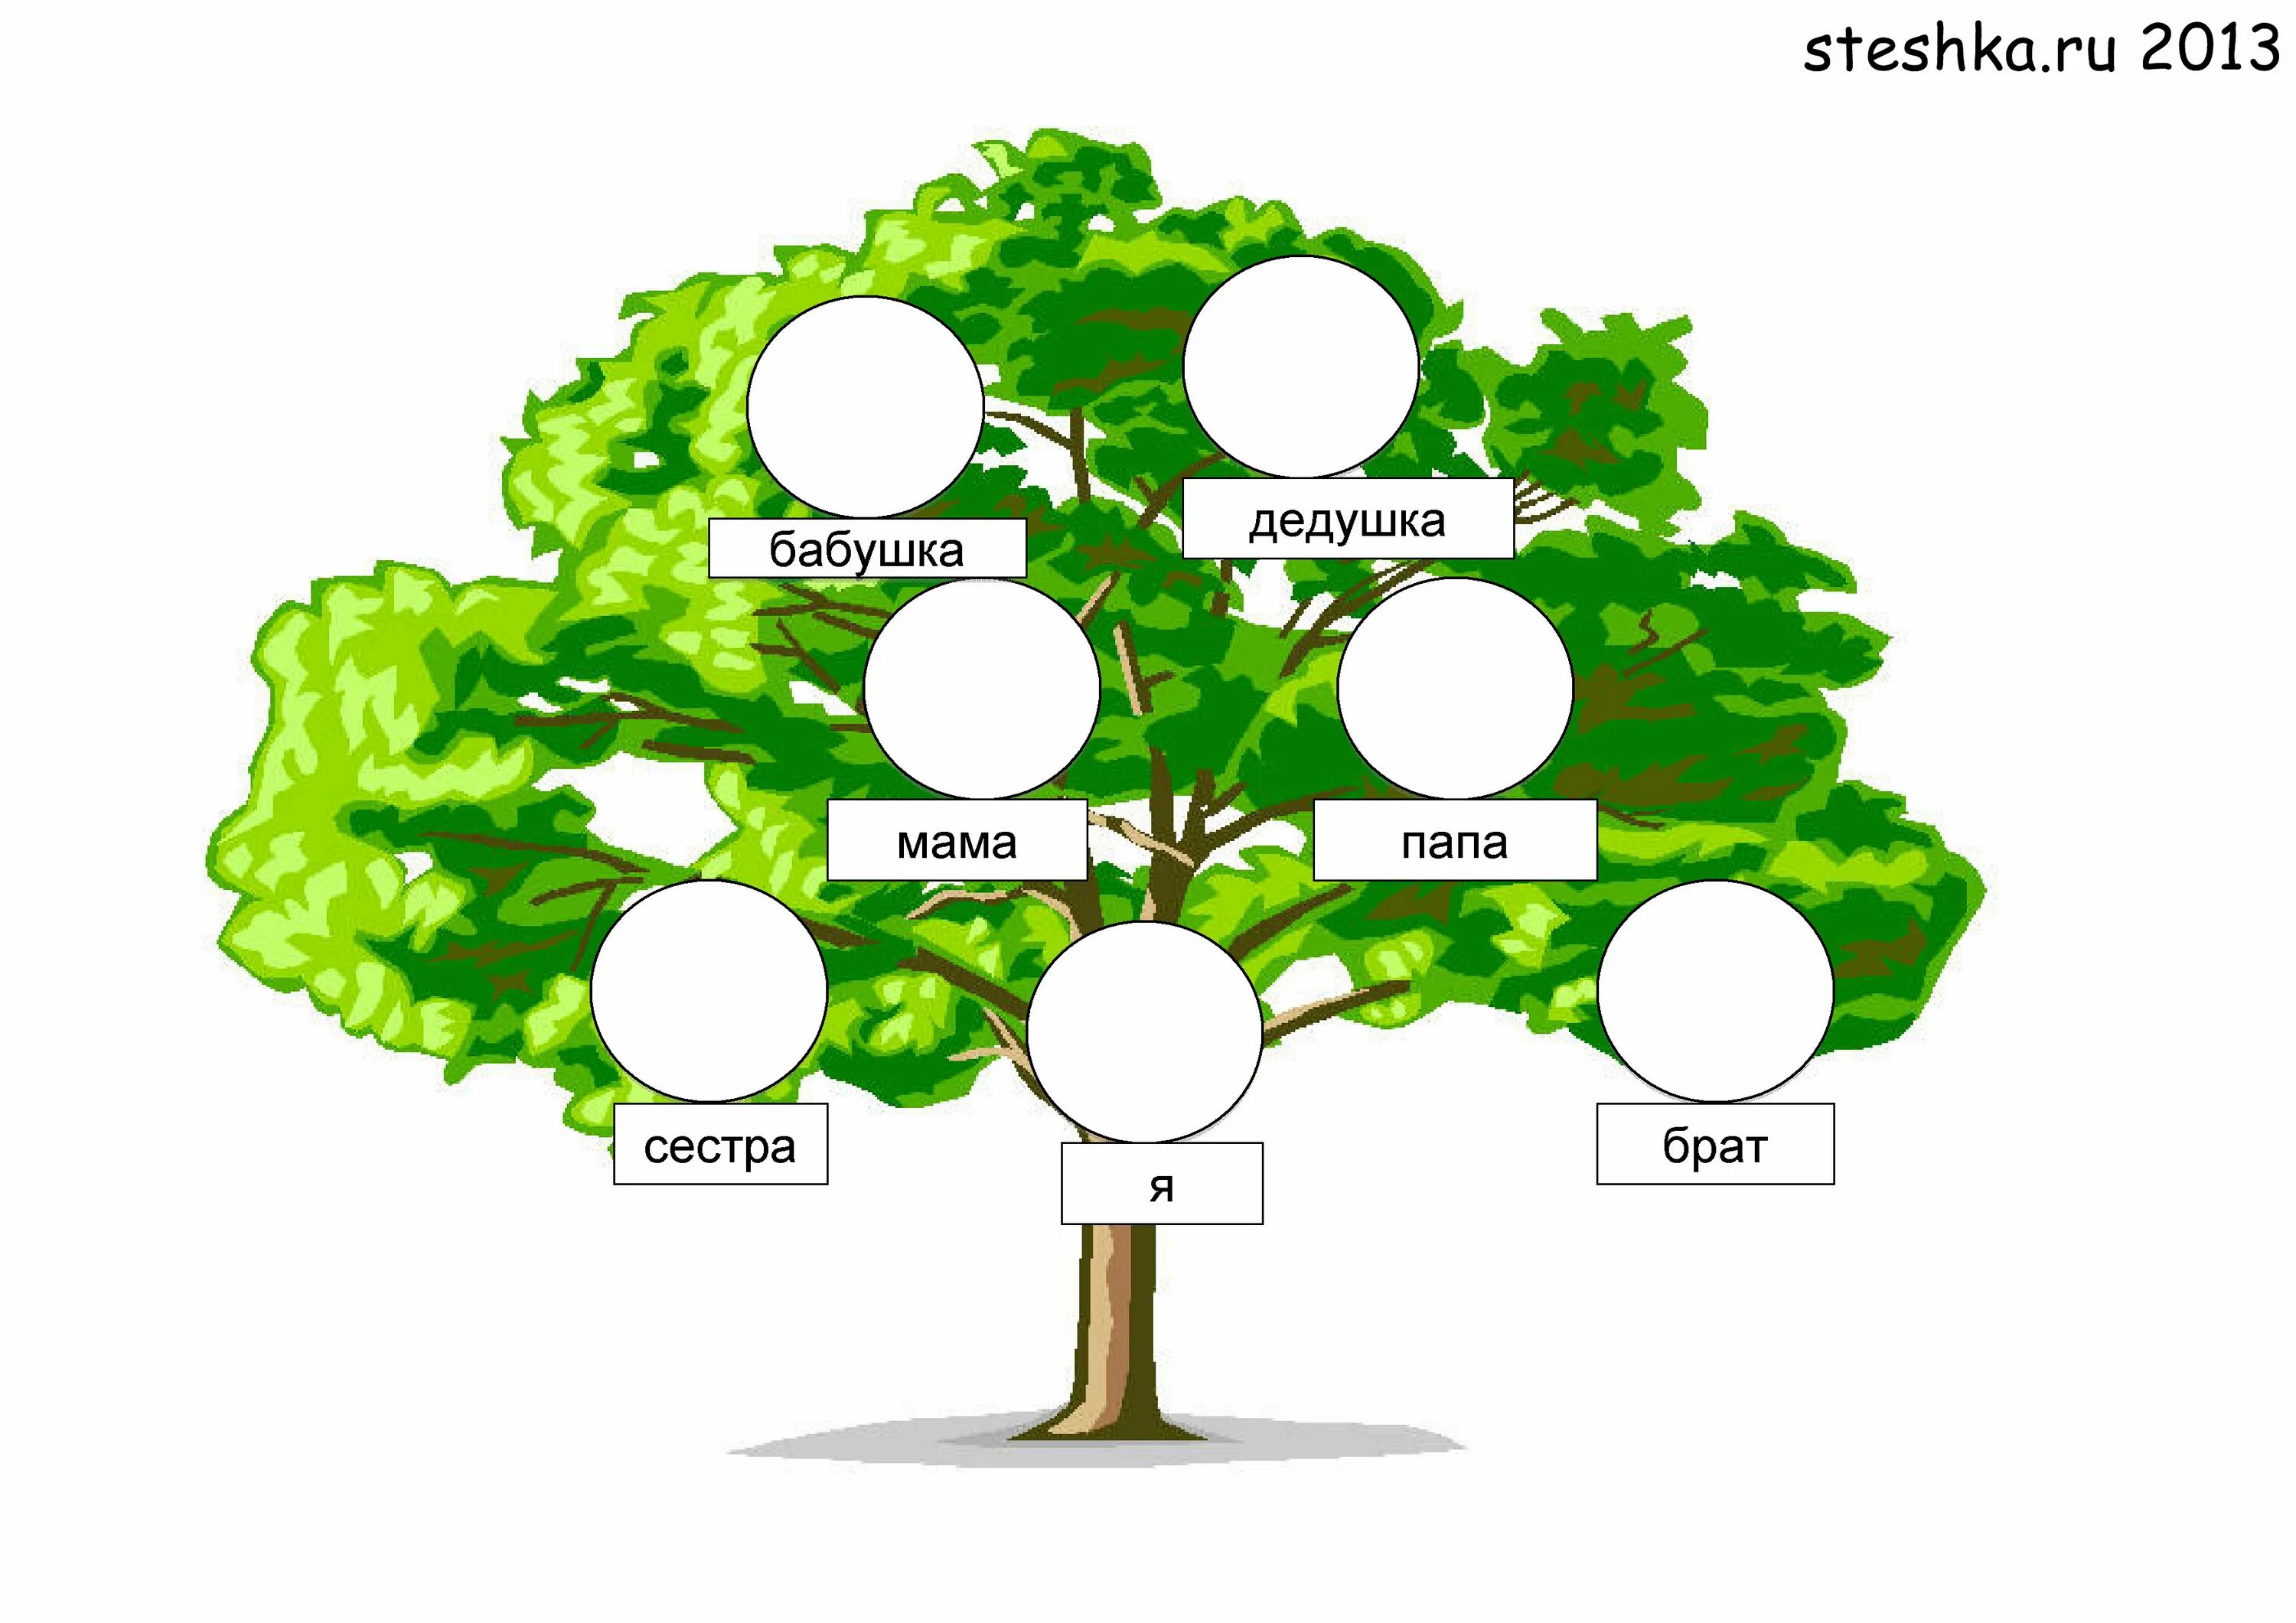 Дерево на начало слова. Родословное Древо семьи по английскому языку. Макет семейного дерева. Семейное дерево на английском. Генеалогическое дерево картинки.